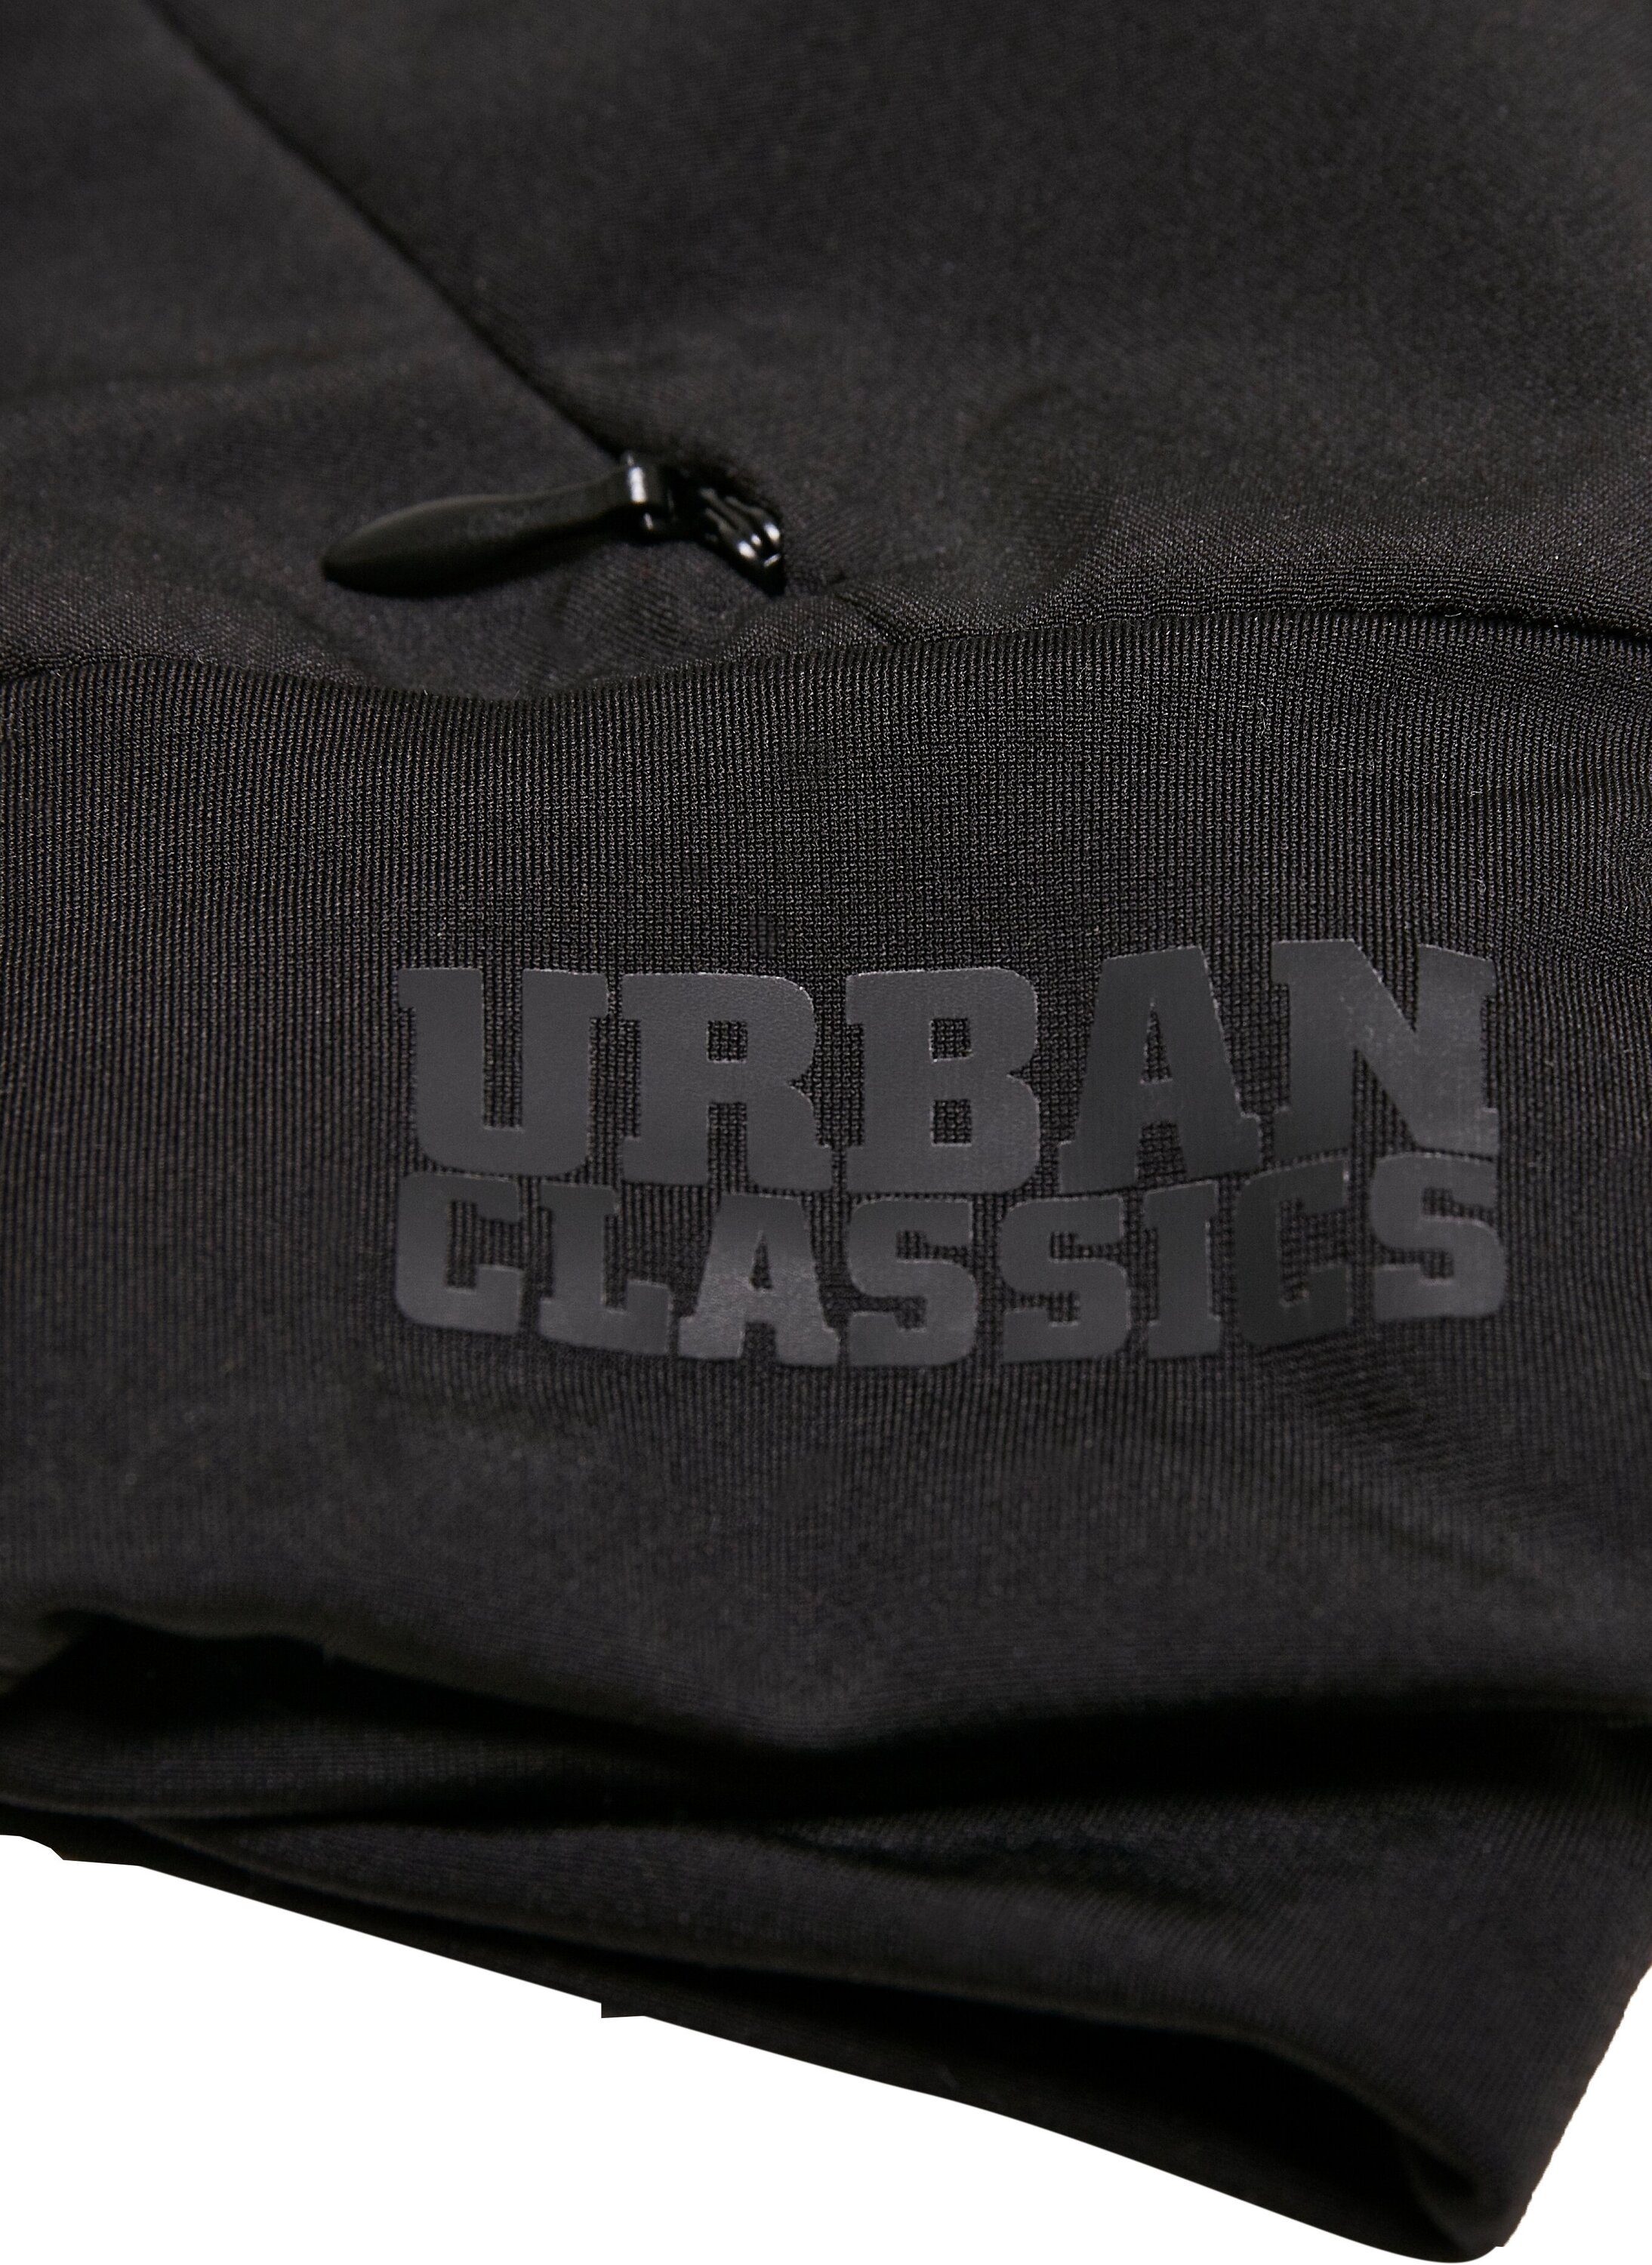 Gloves Cuff URBAN Performance Baumwollhandschuhe Unisex Logo CLASSICS